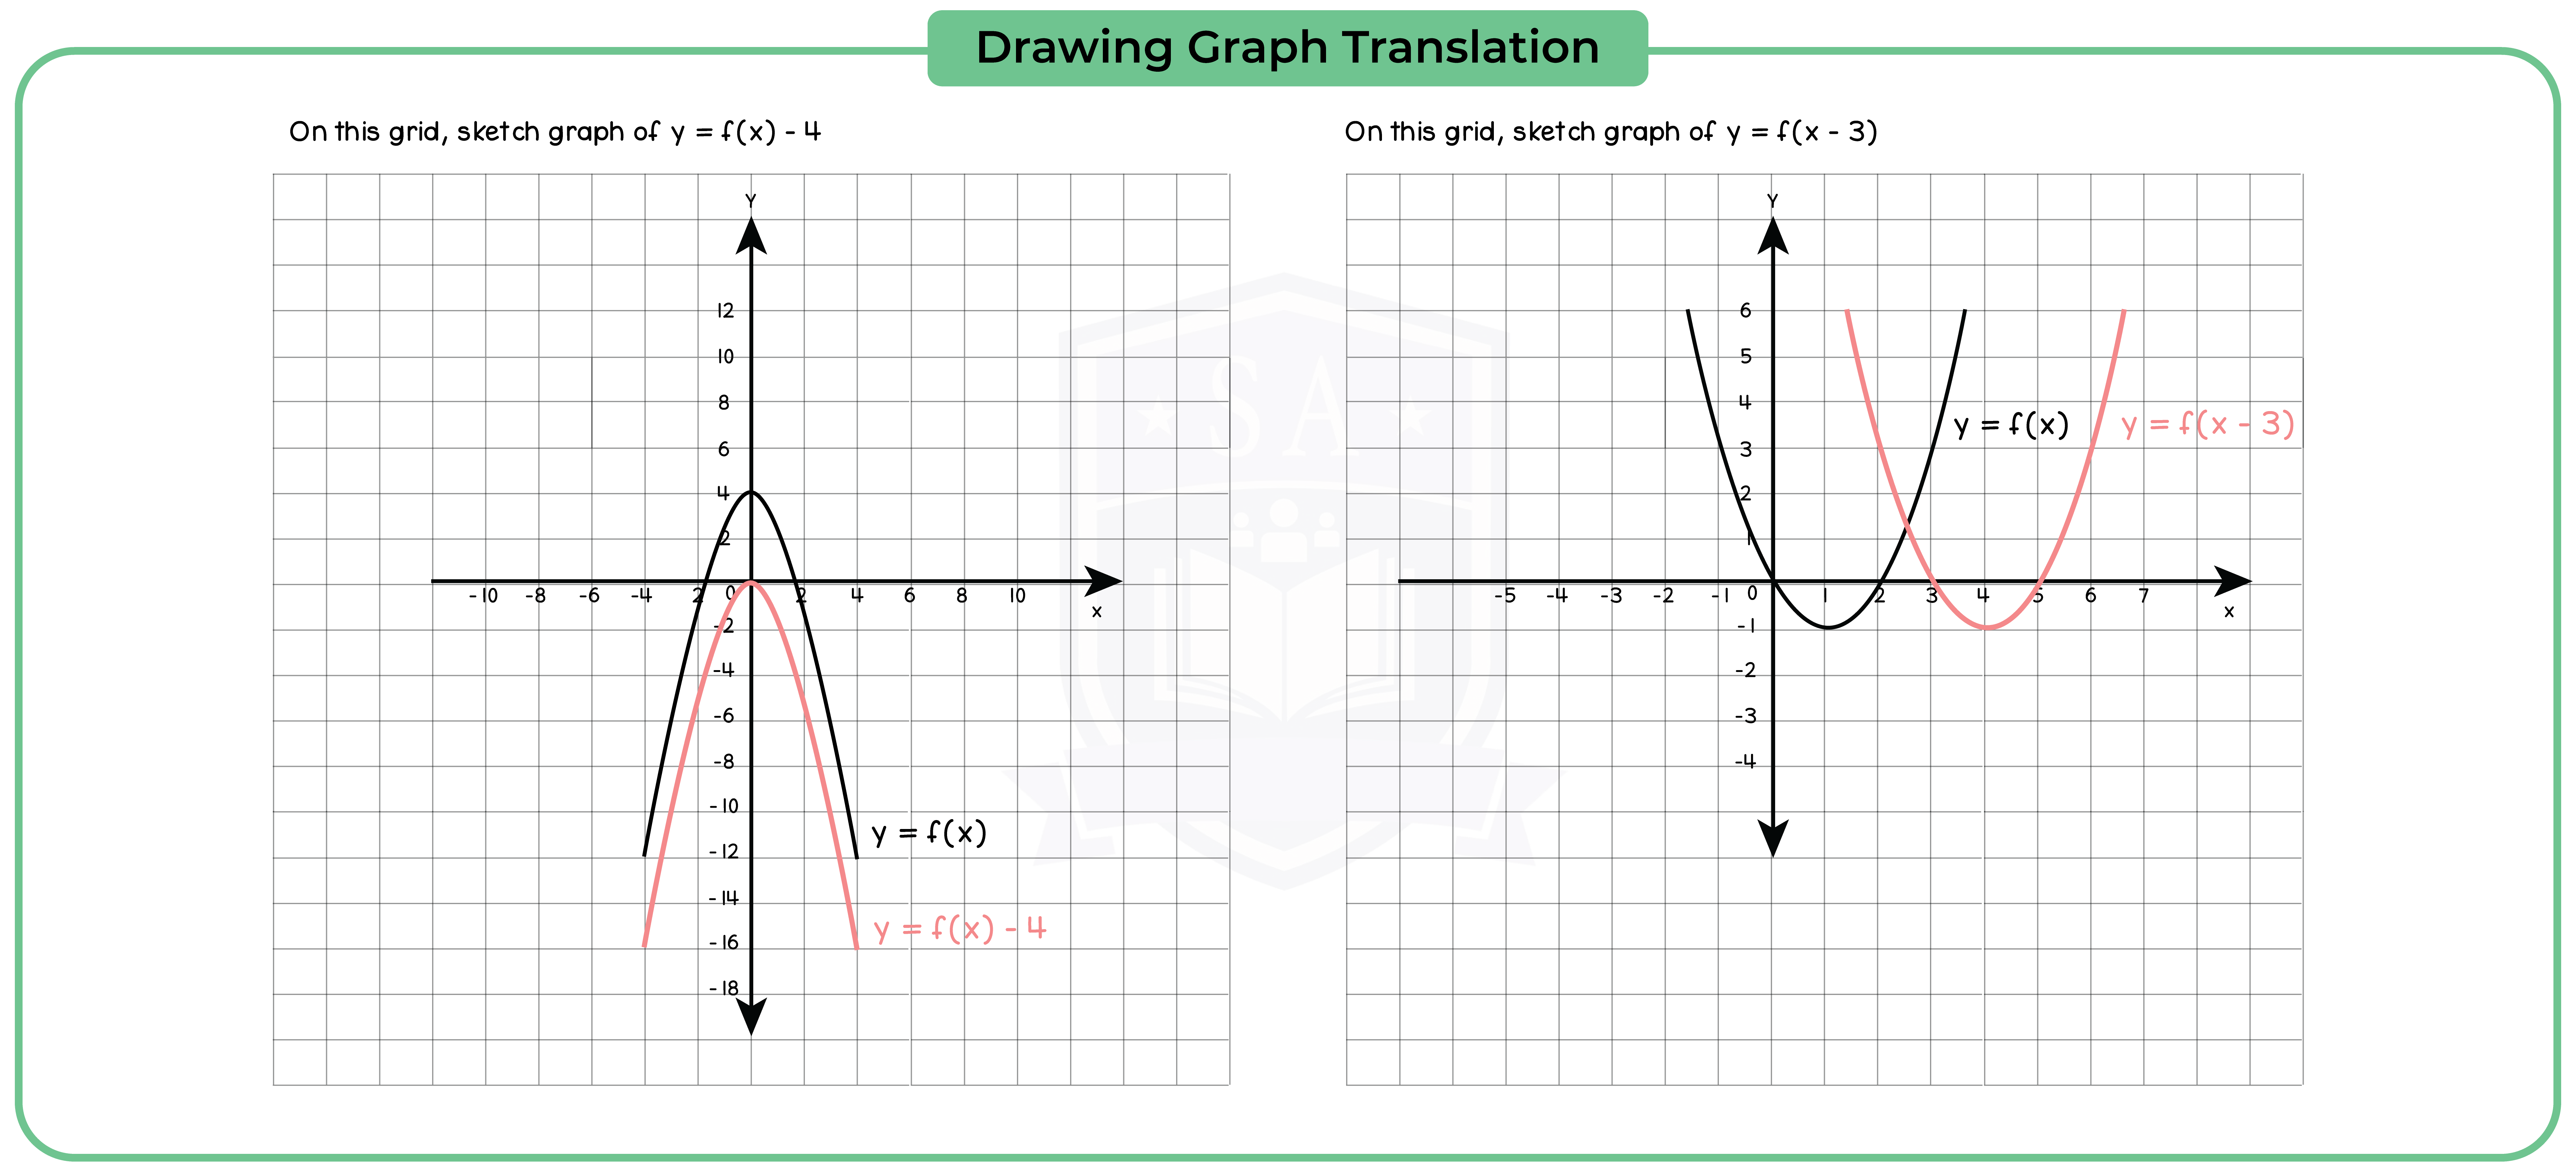 edexcel_igcse_mathematics a_topic 23_graphs_019_Drawing Graph Translation